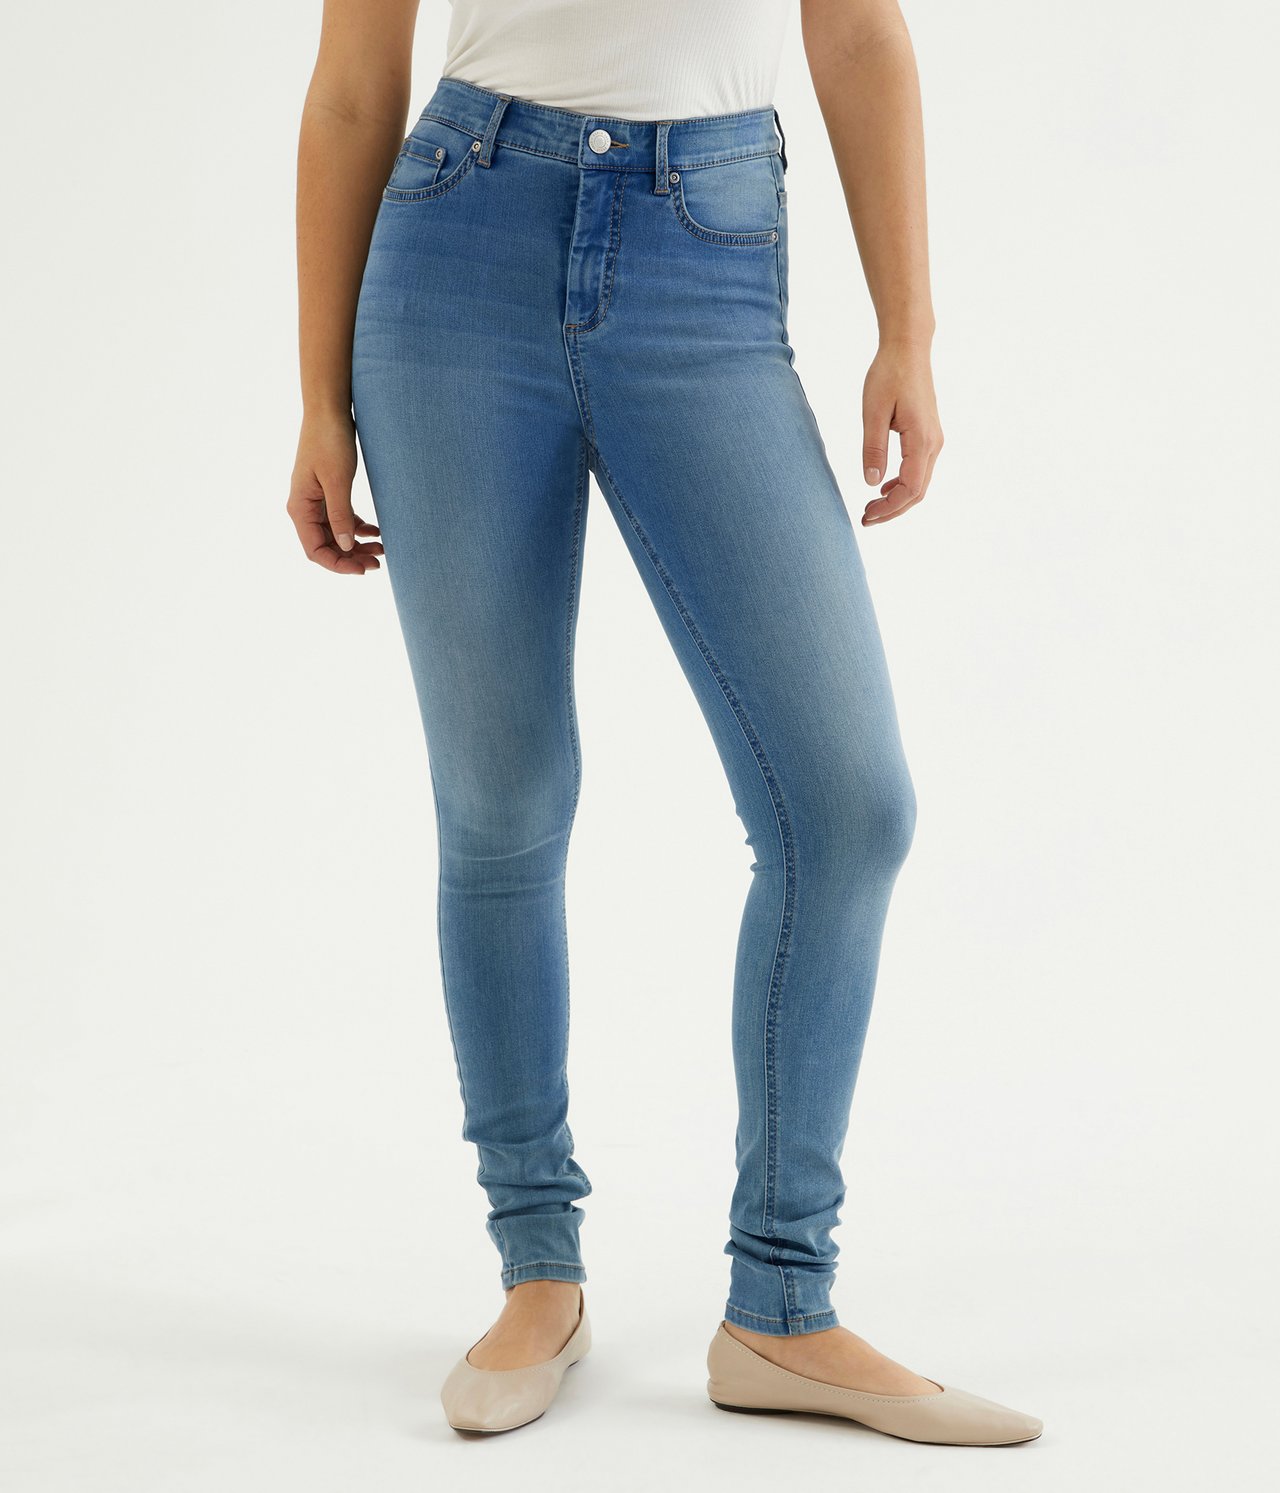 Super slim jeans extra long leg Denim - null - 2